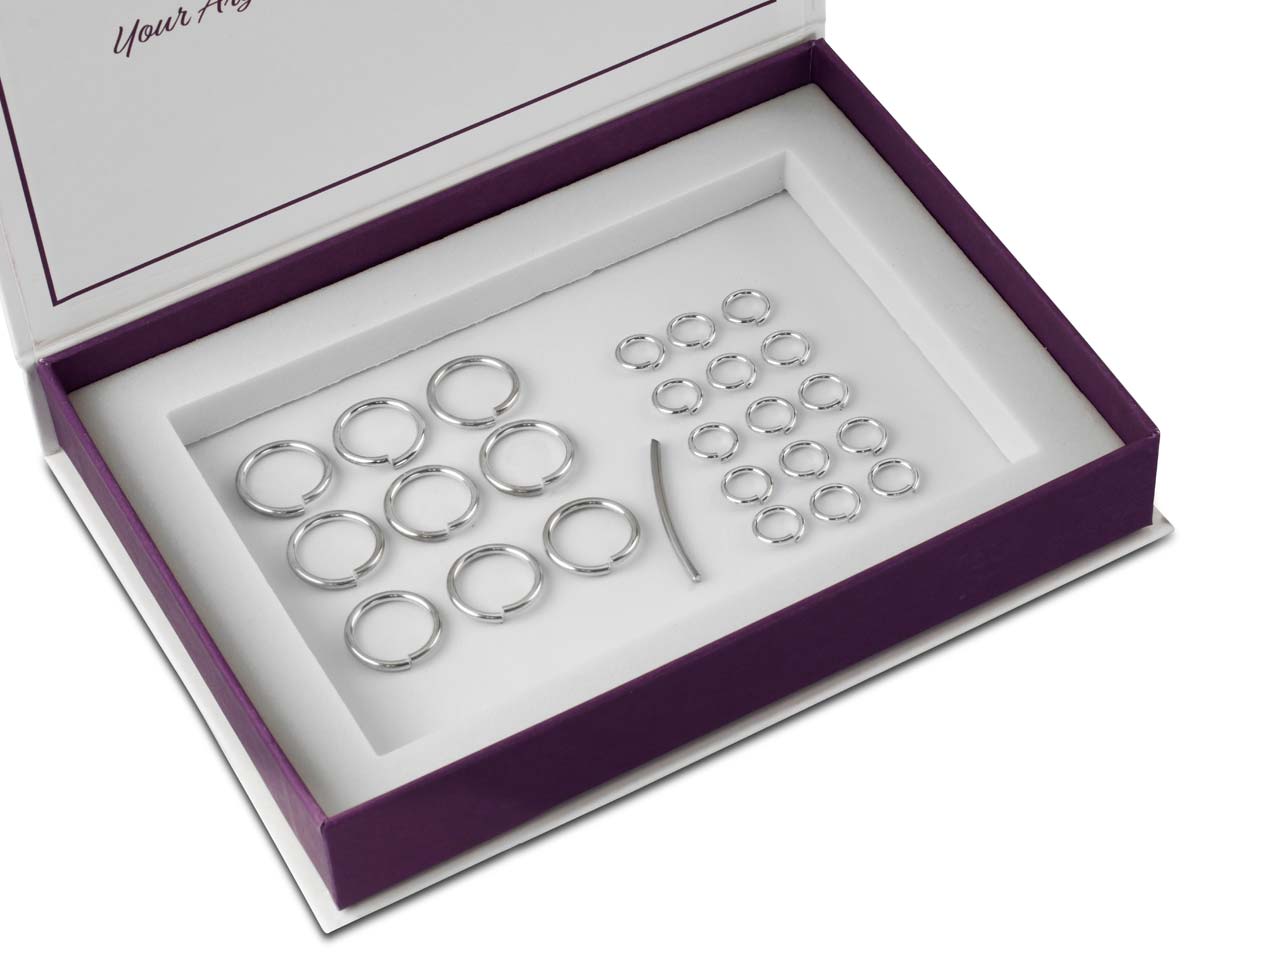 Do you have instructions for Argentium Silver Endless Circles Bracelet Kit?